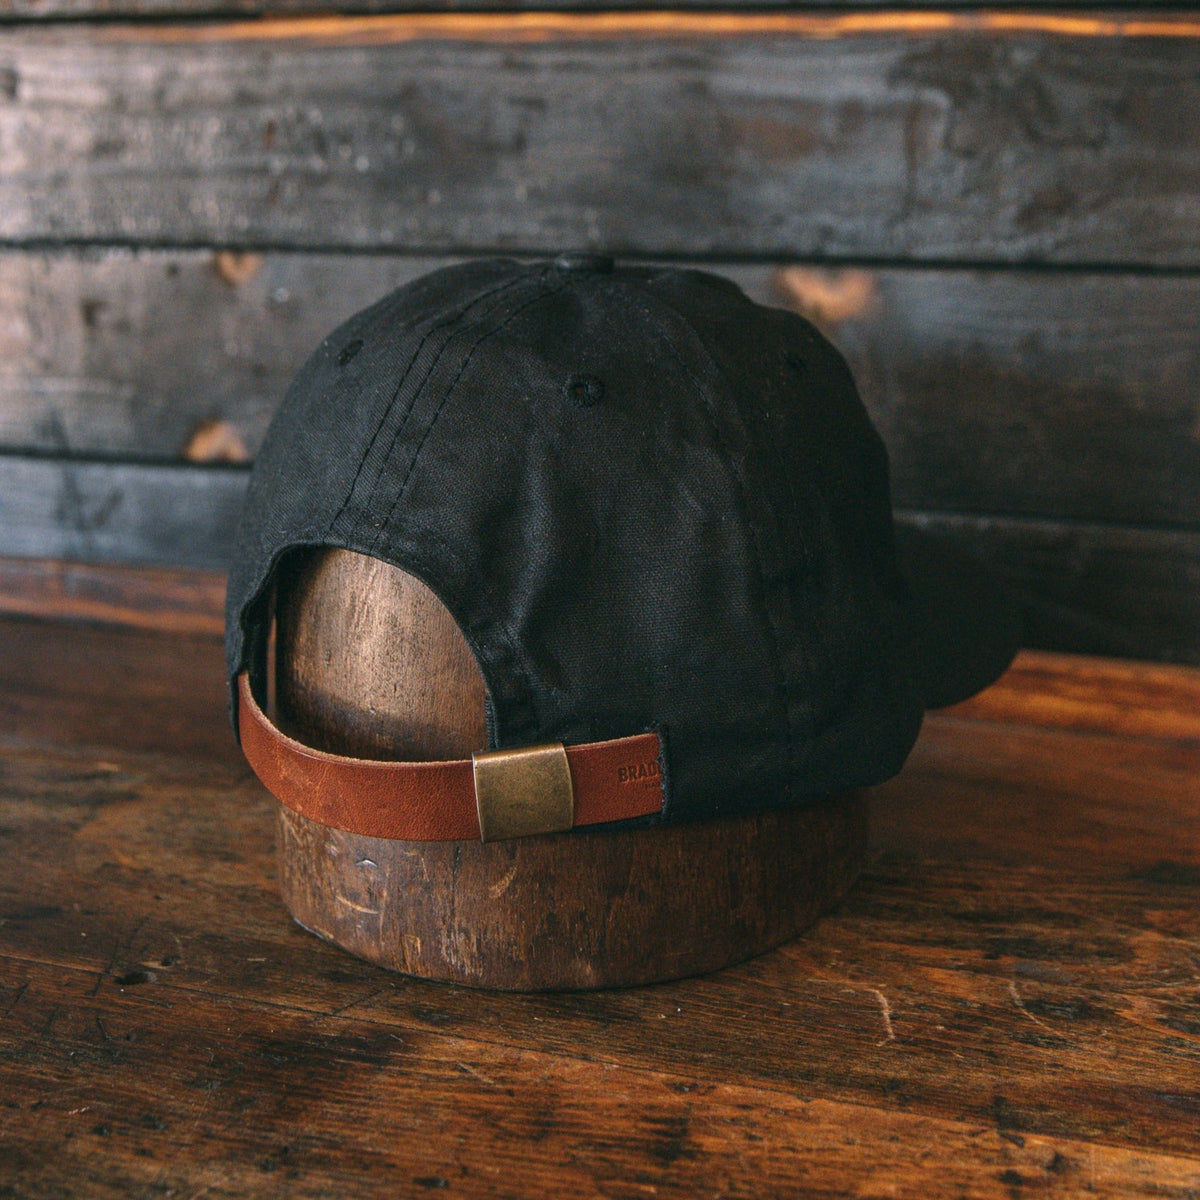 leather baseball hat